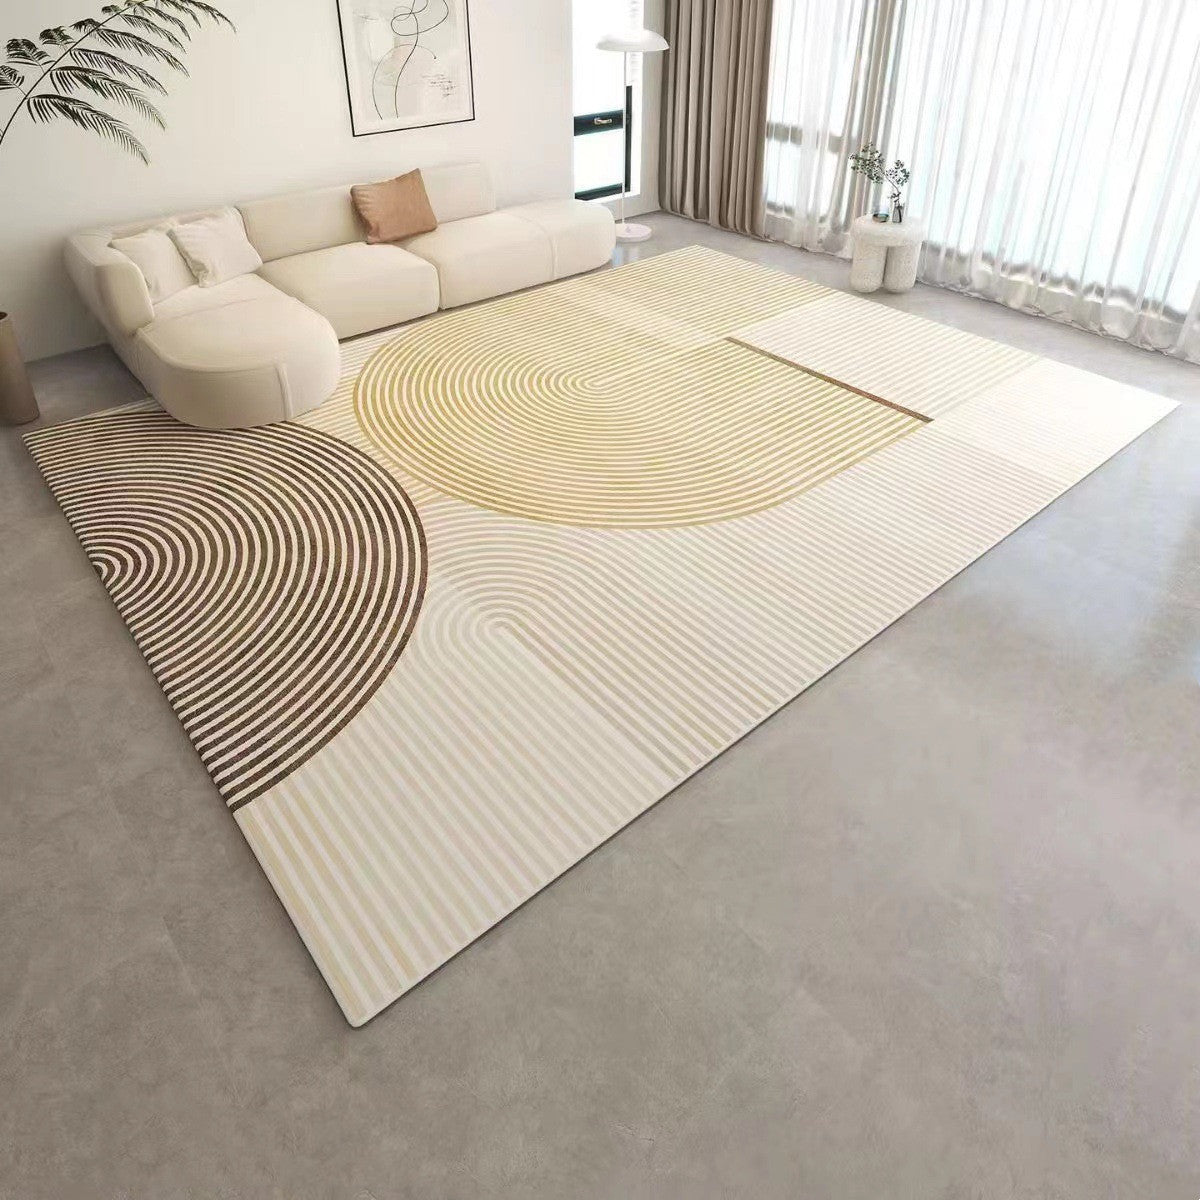 Universal square rug